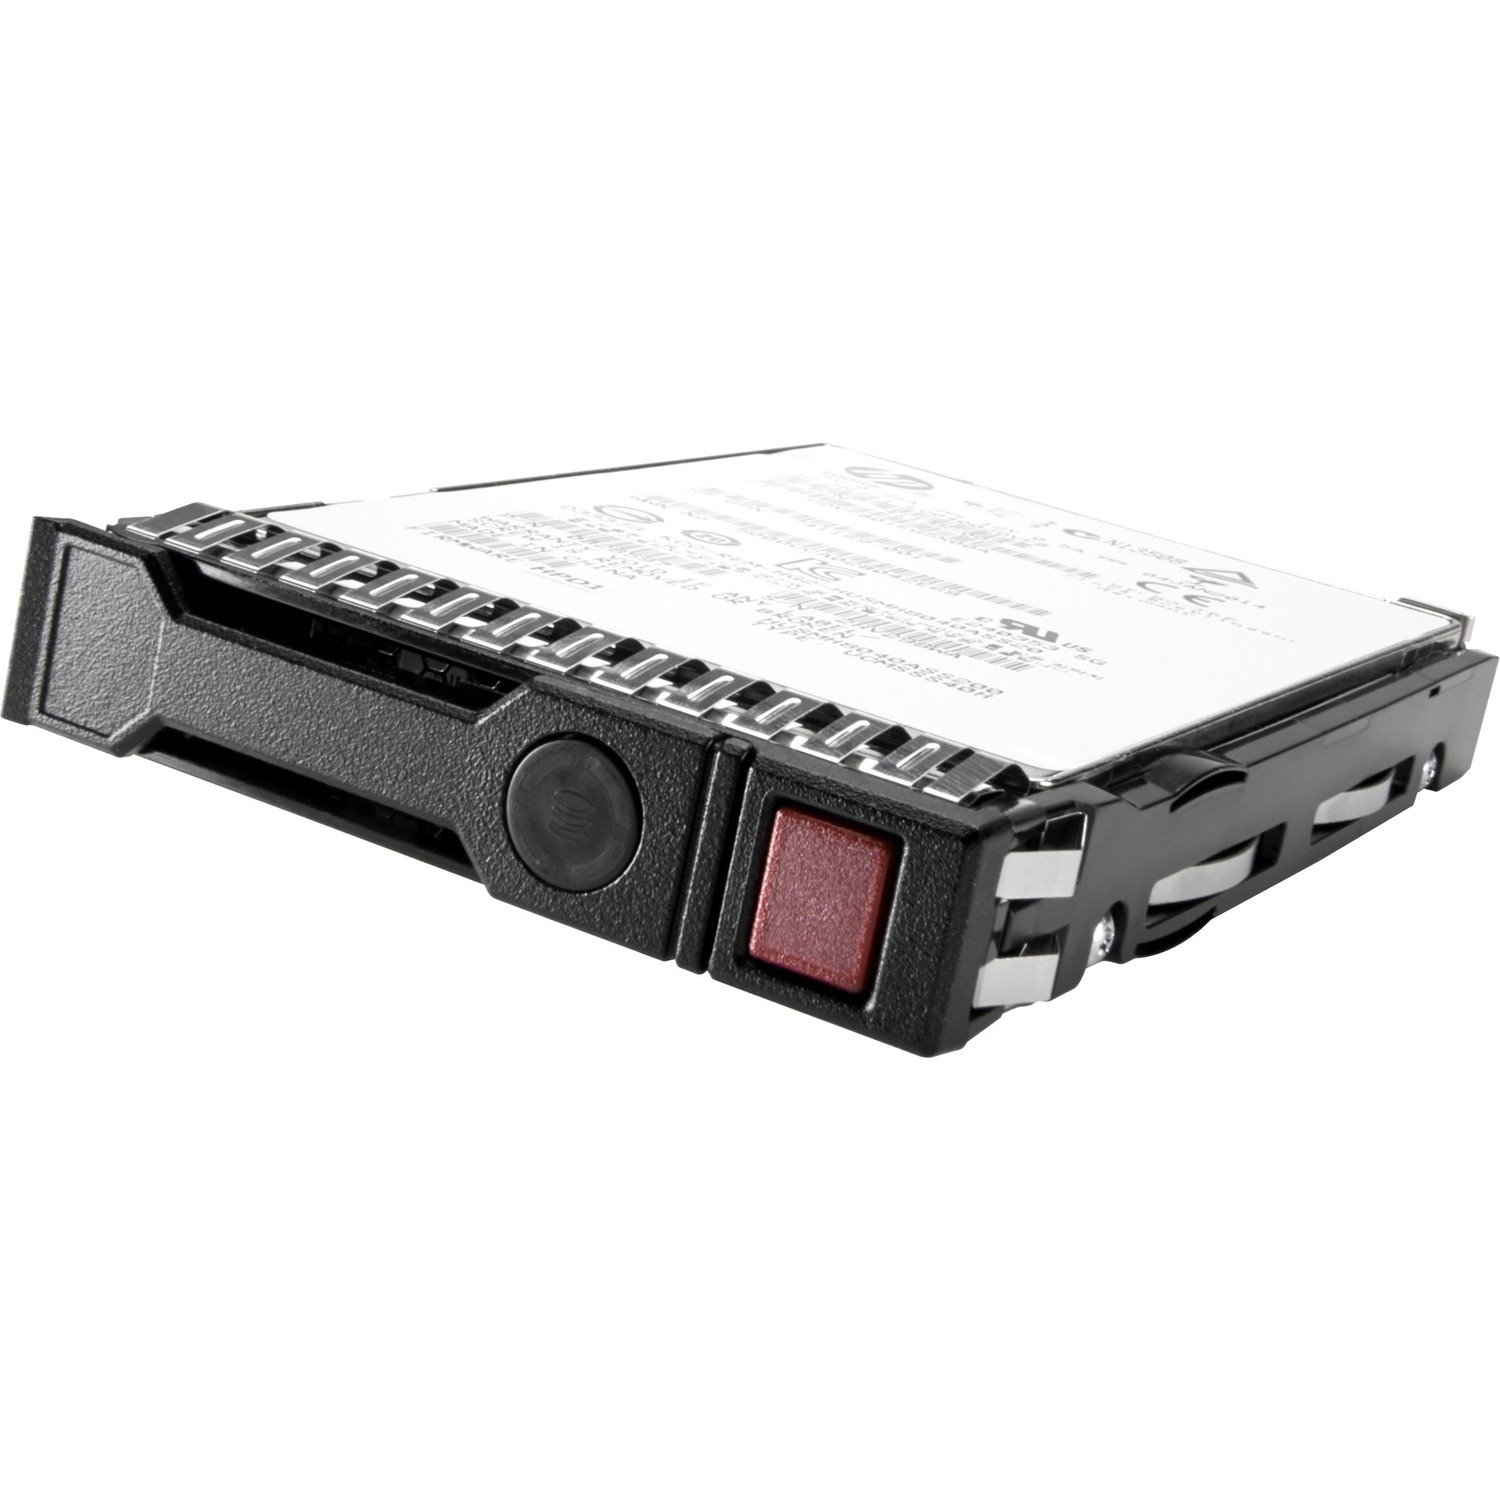 Accortec 600 GB Hard Drive - Internal - SAS (12Gb/s SAS)